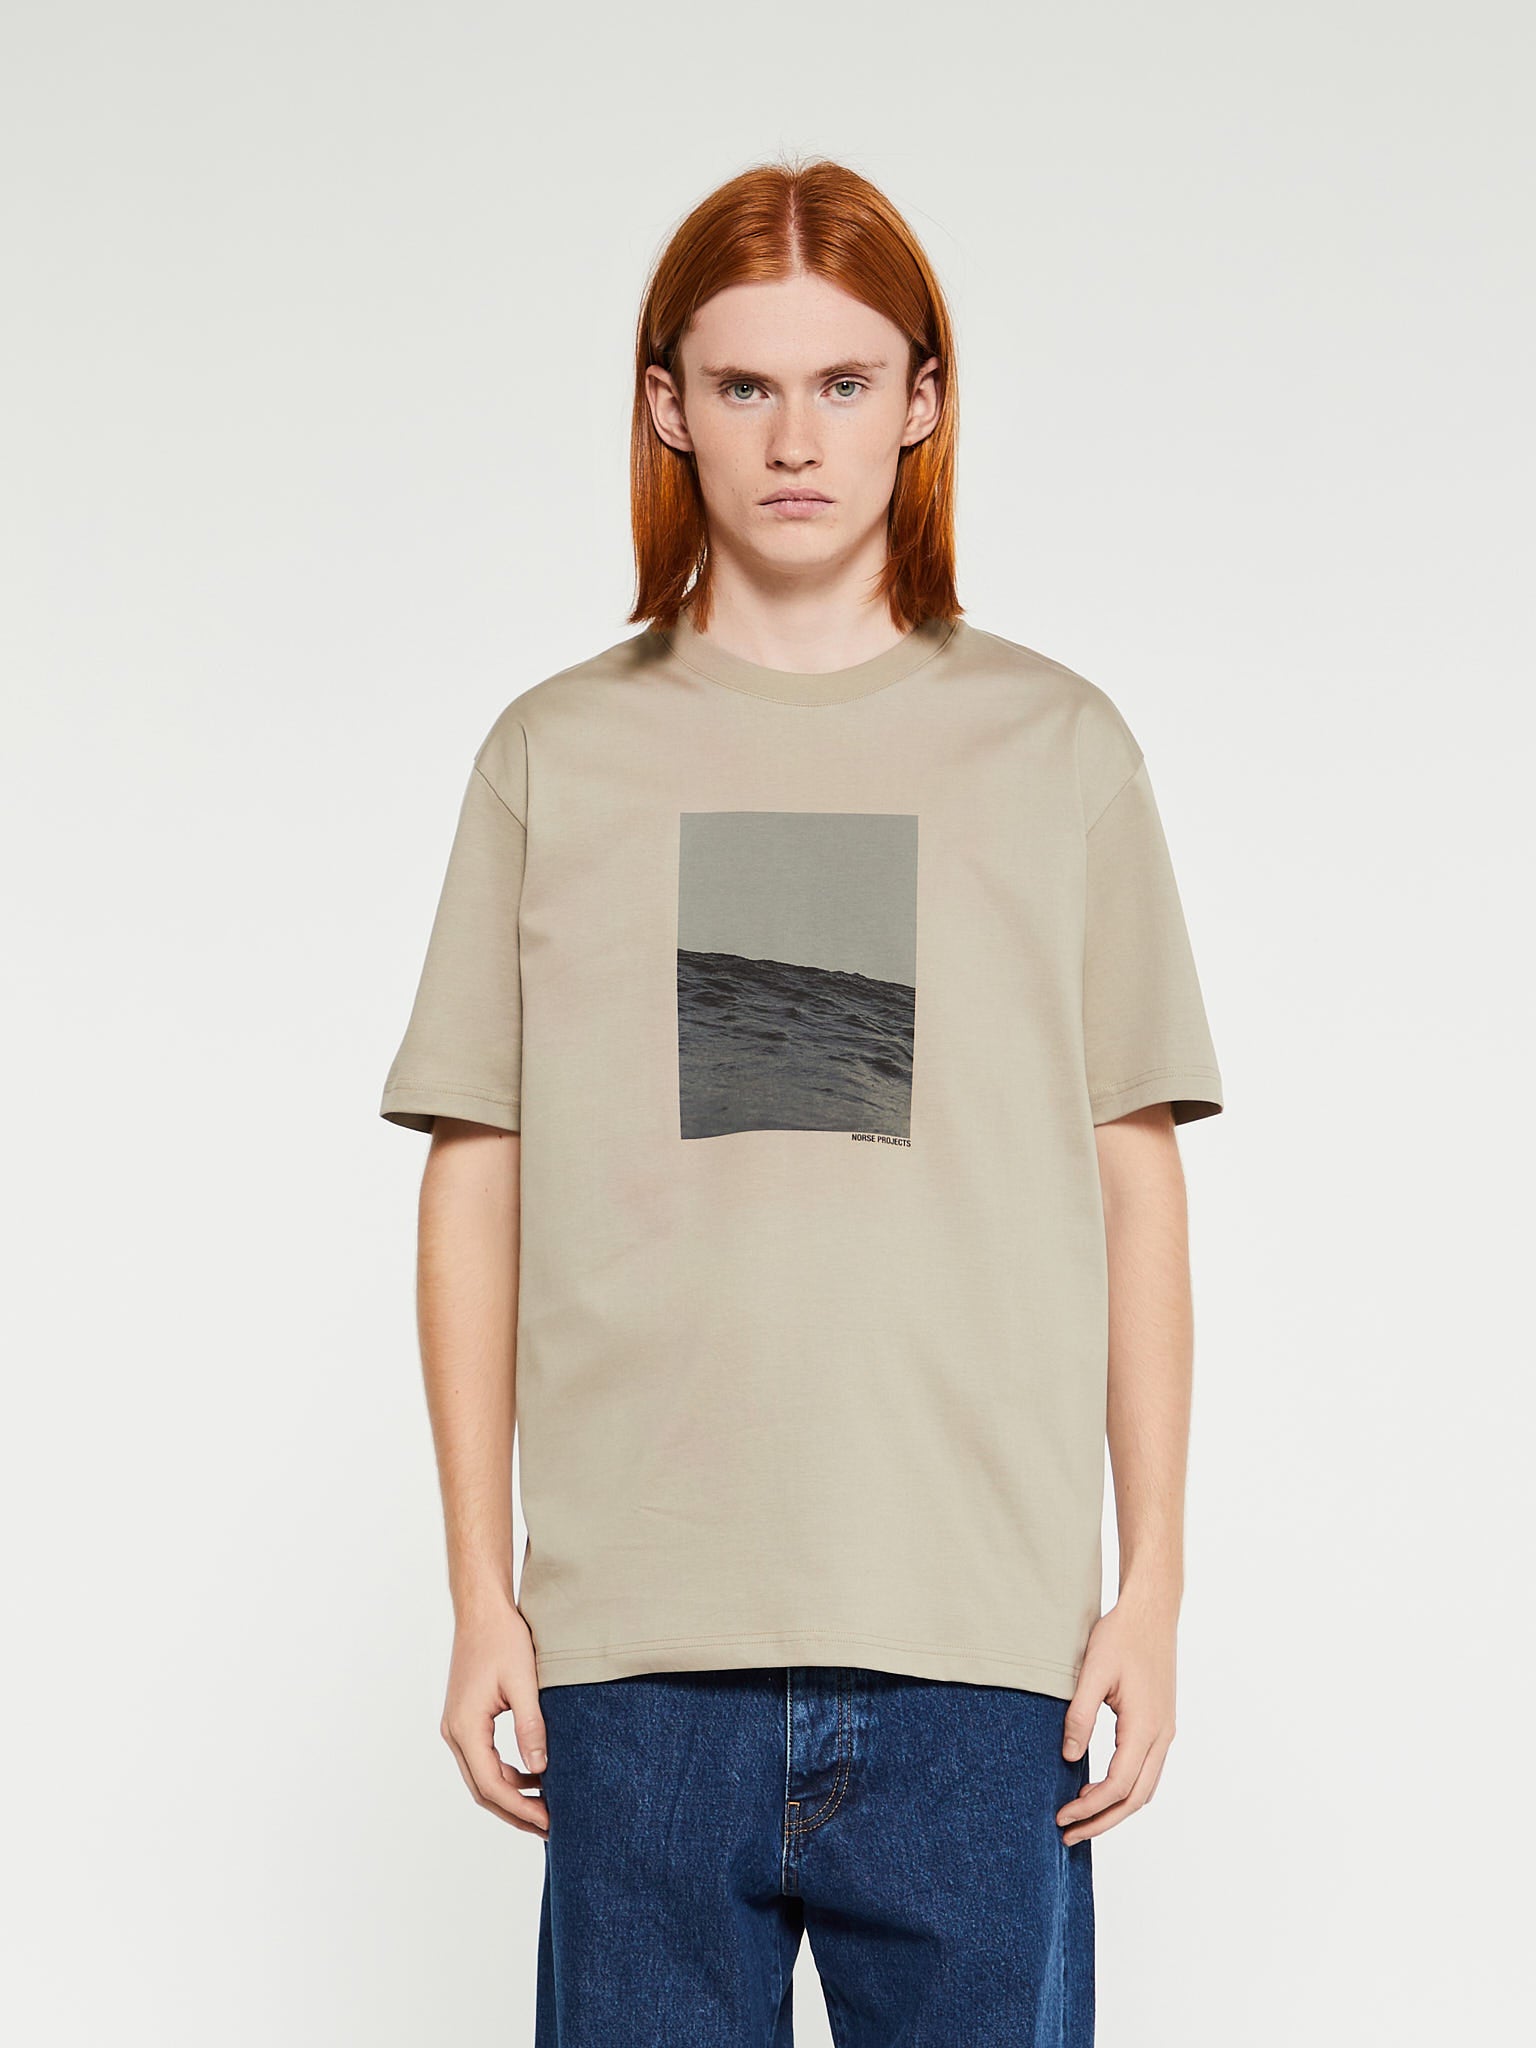 Johannes Organic Waves Print T-Shirt in Sand